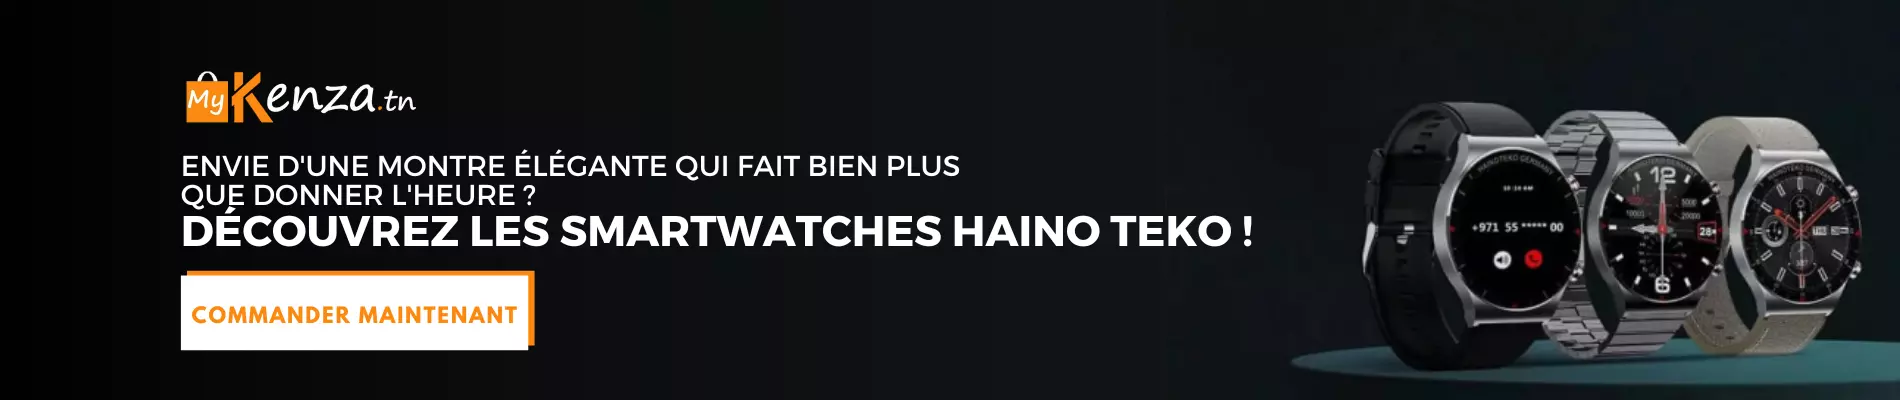 Smartwatches Haino Teko